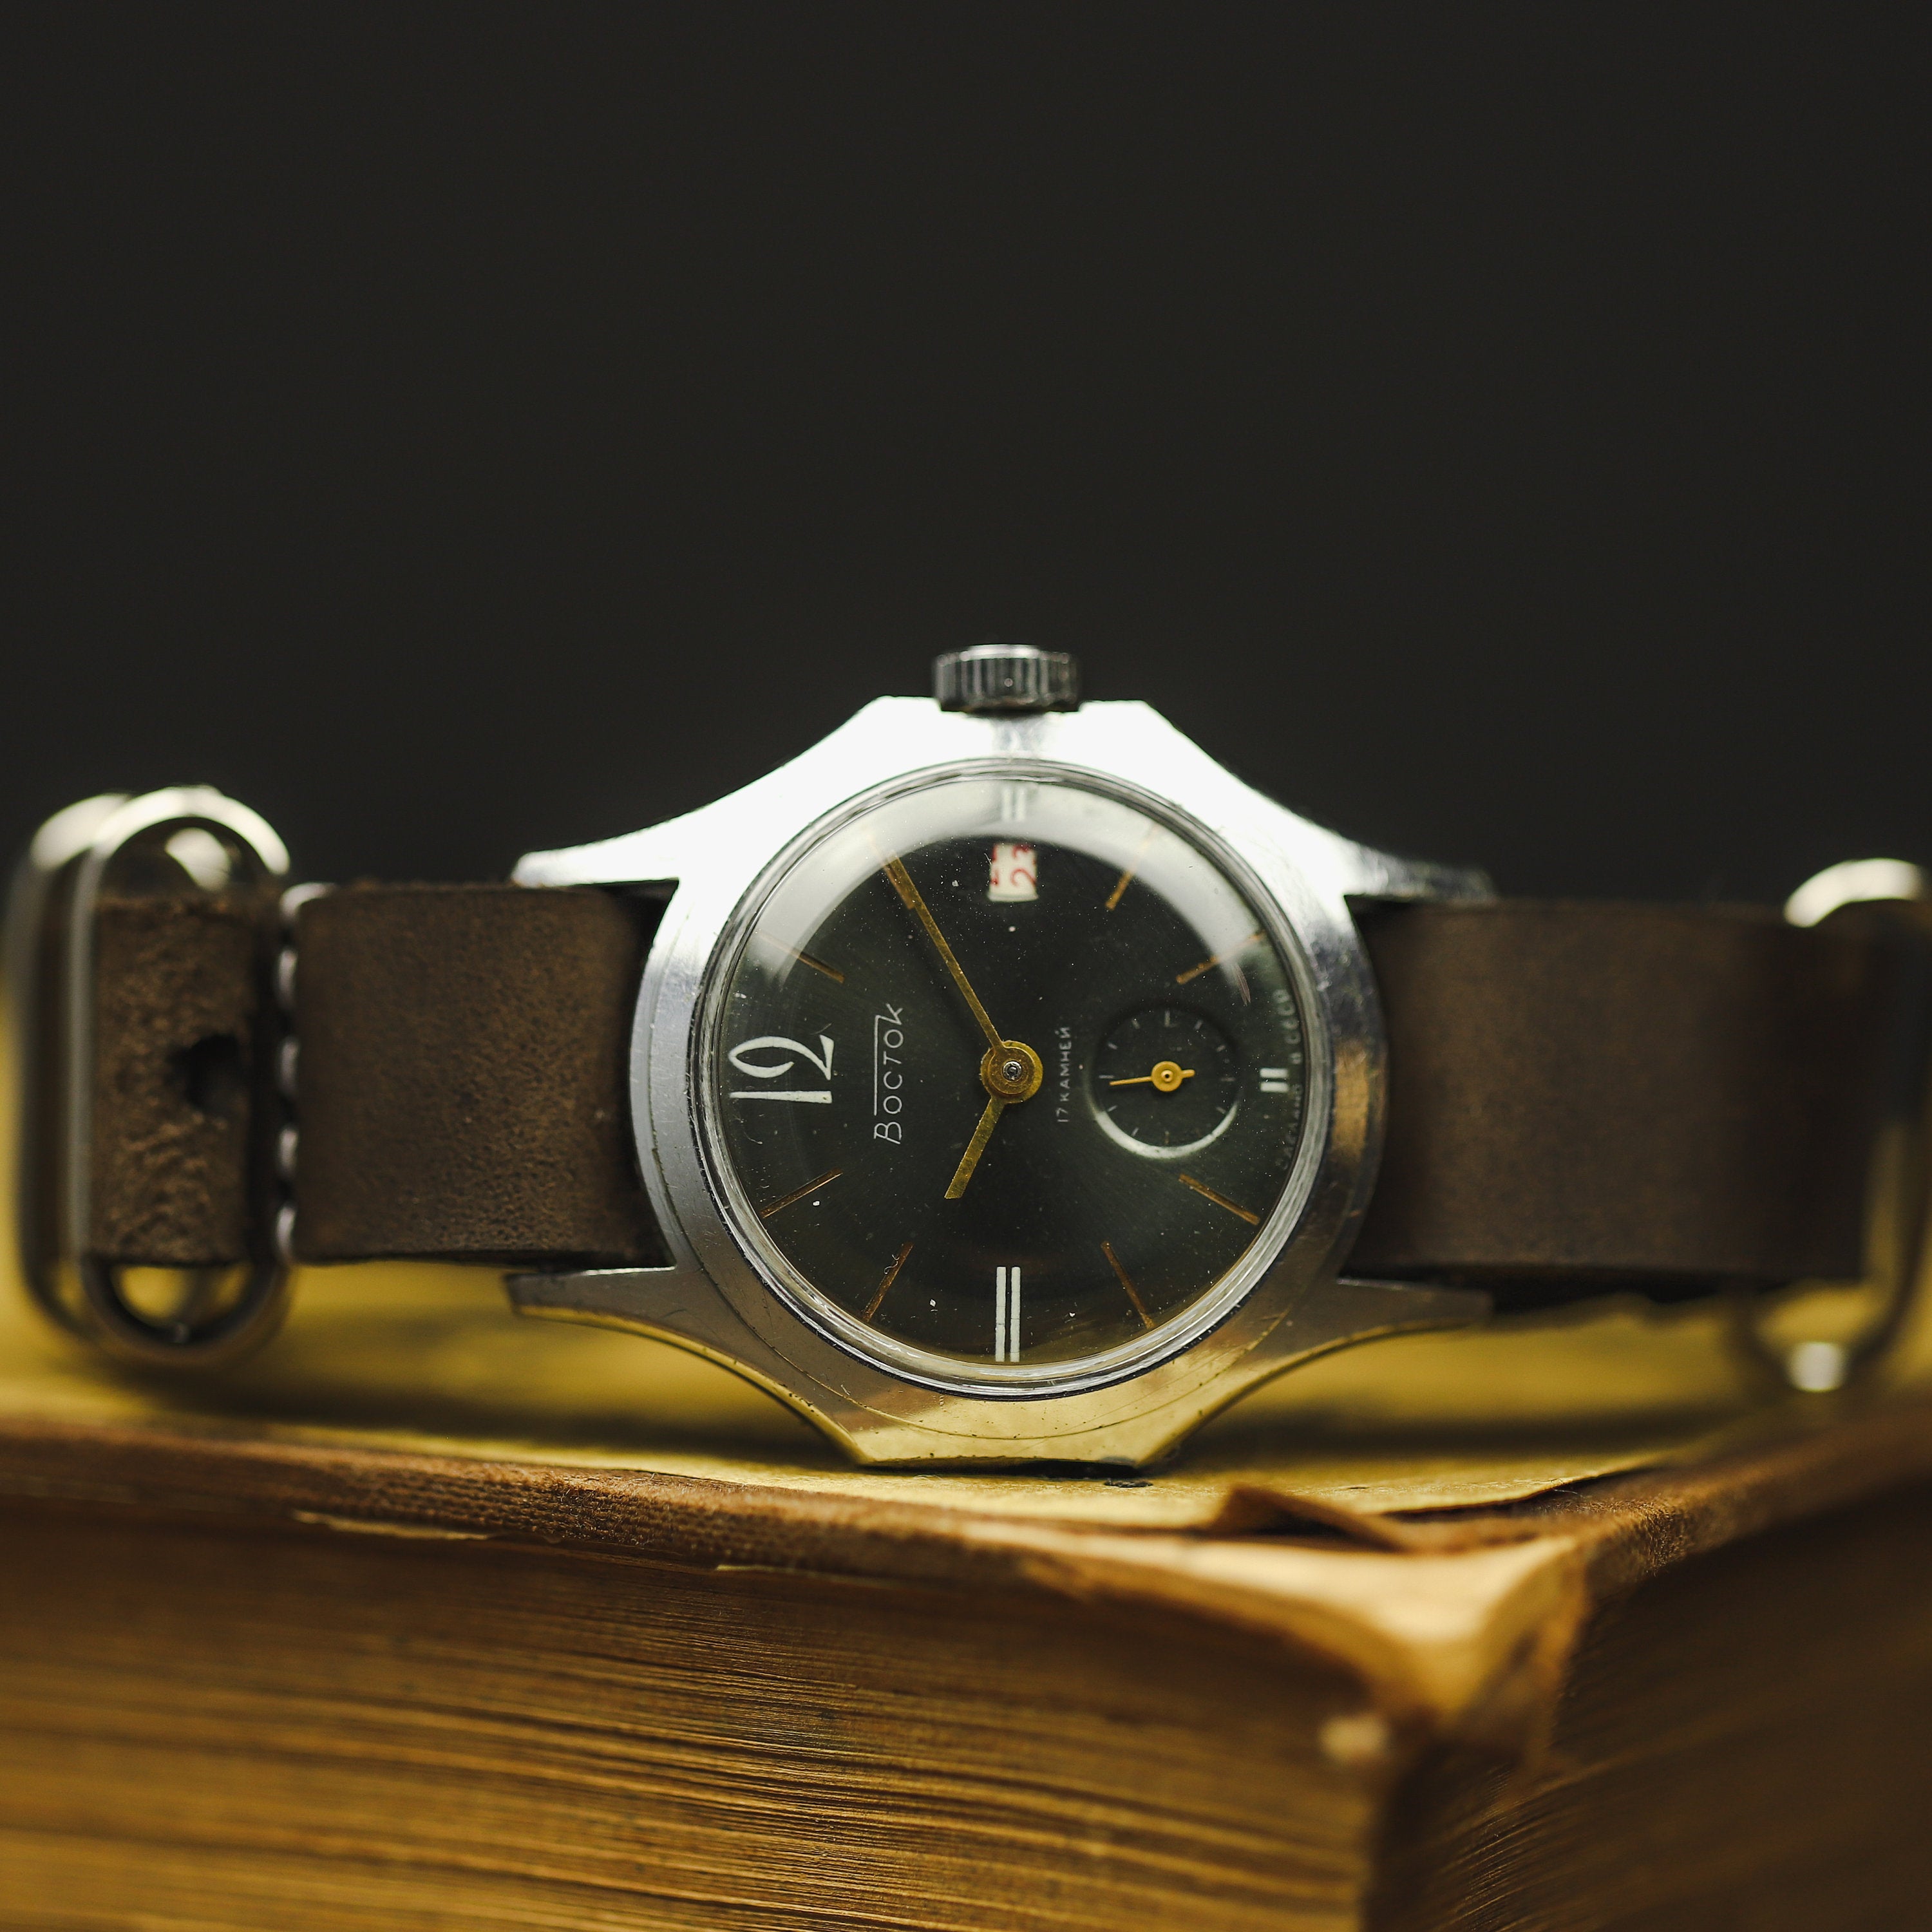 Collectible soviet mechanical watch VOSTOK 1950 release. Vintage watch, watches for men, wedding gift, USSR watch, mens watch